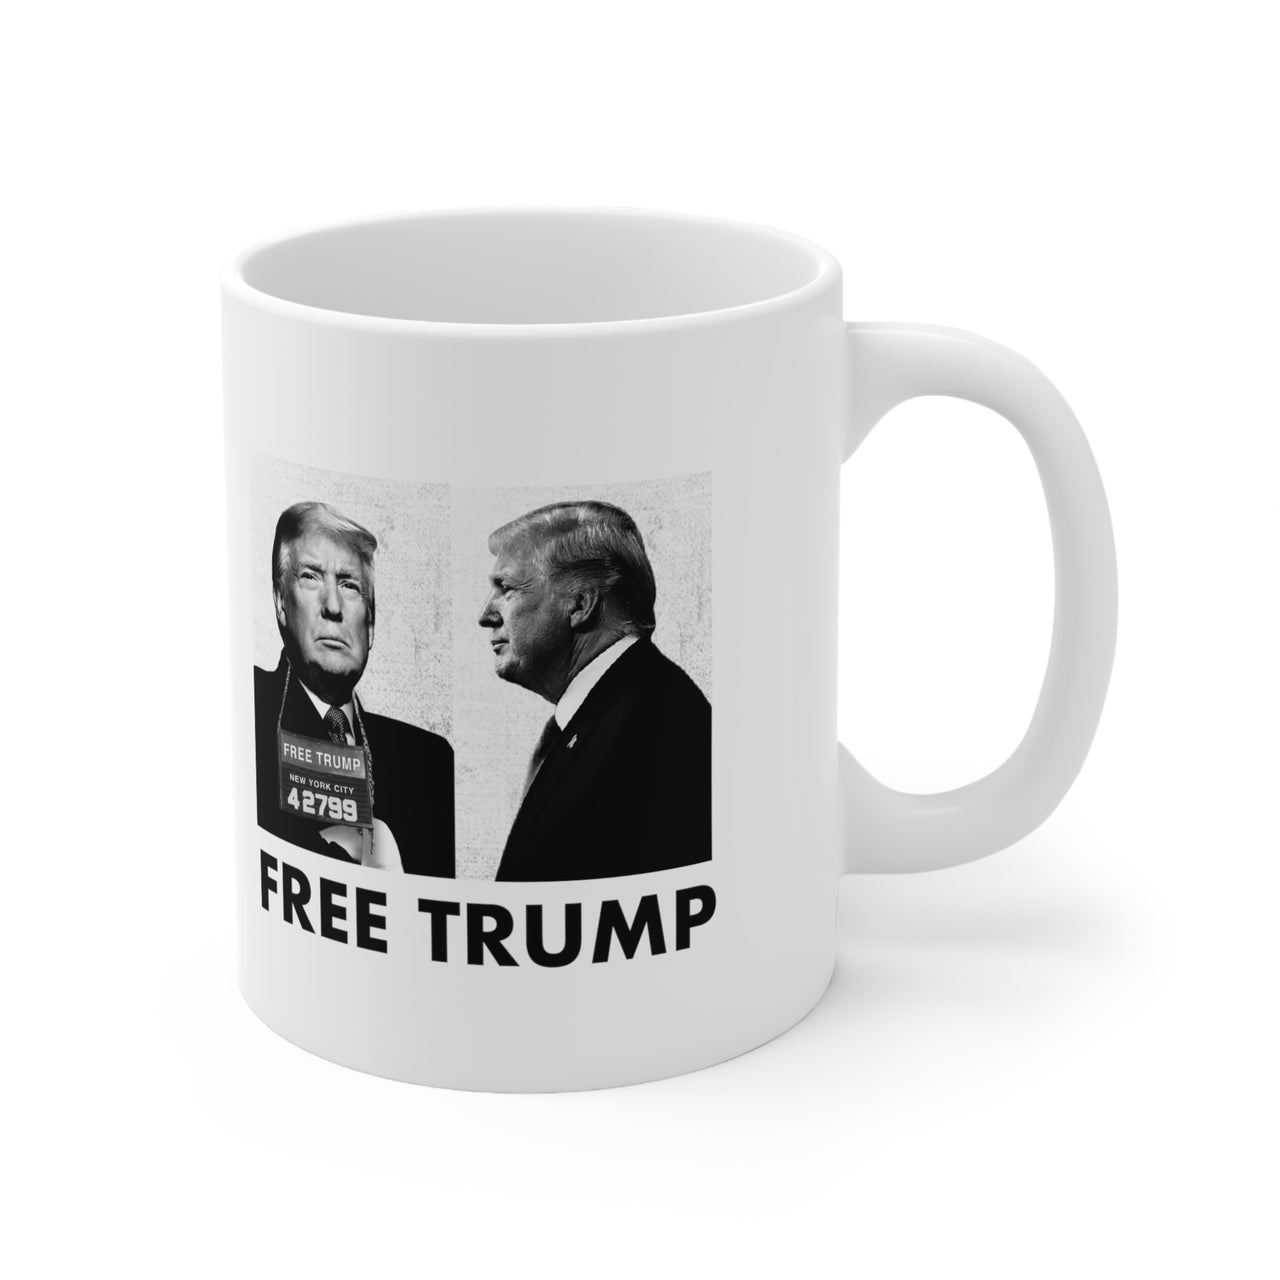 Free Trump Mug